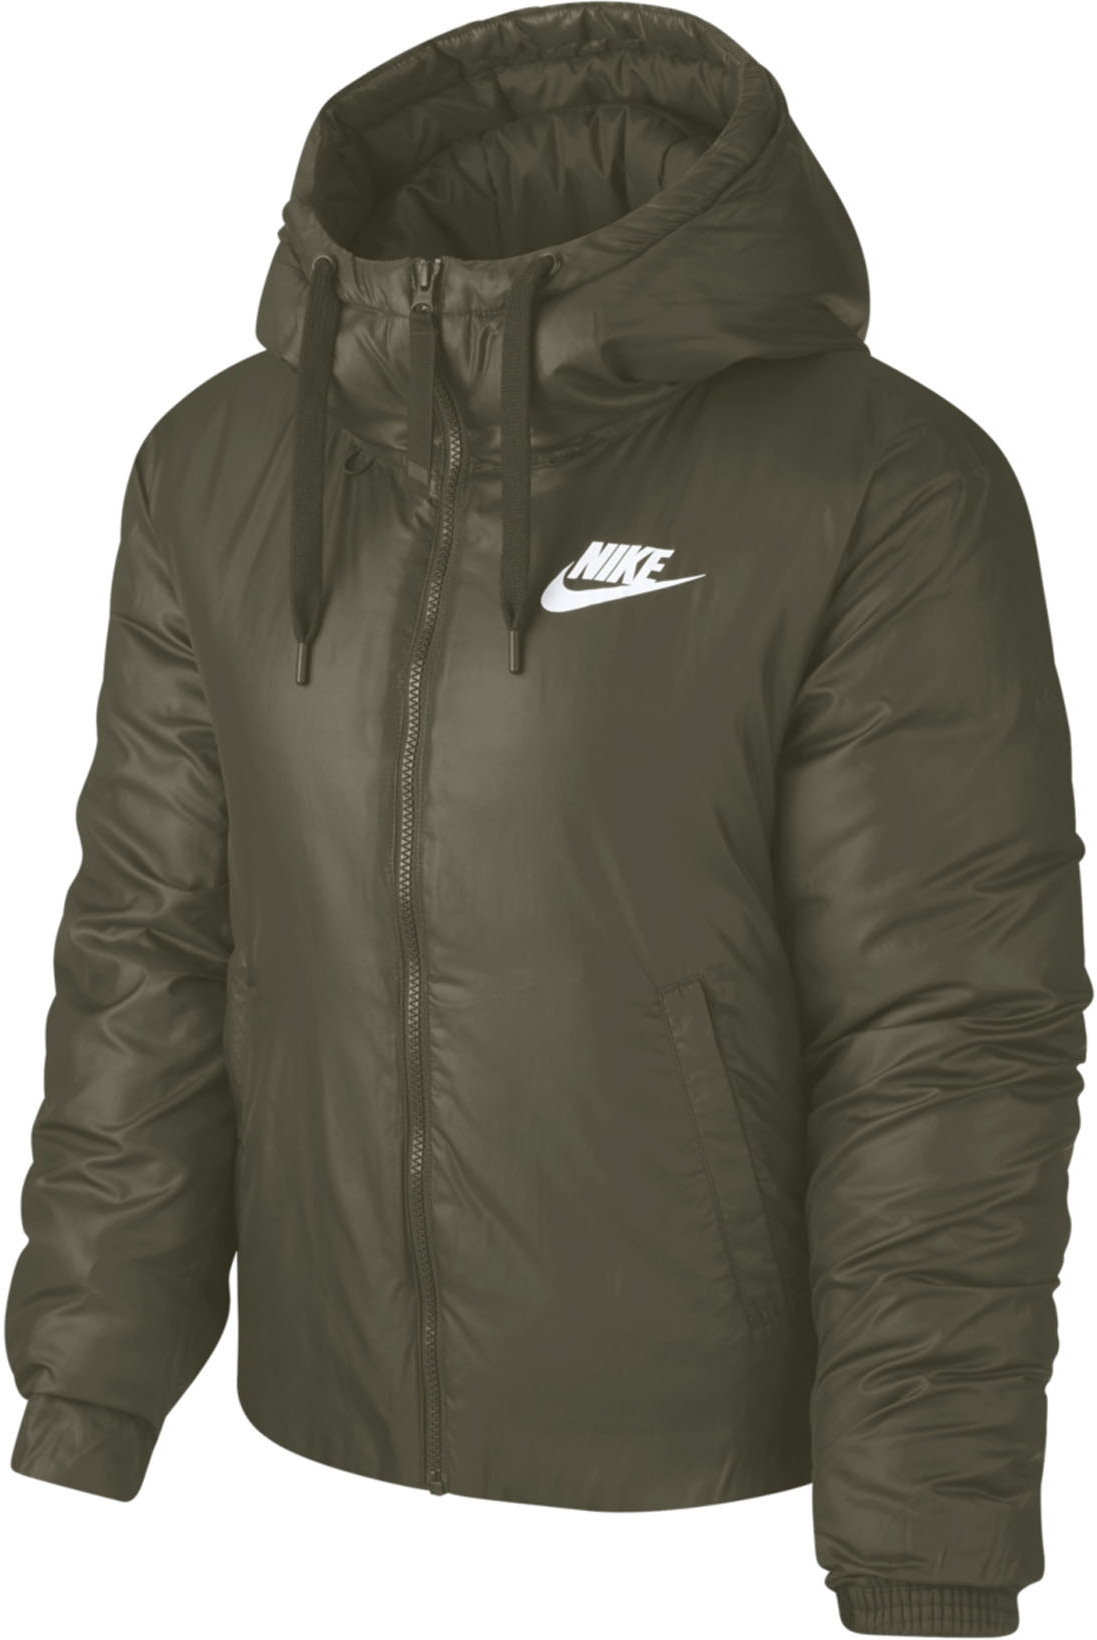 Женская куртка Nike Sportswear Syn Fill AQ0021-307